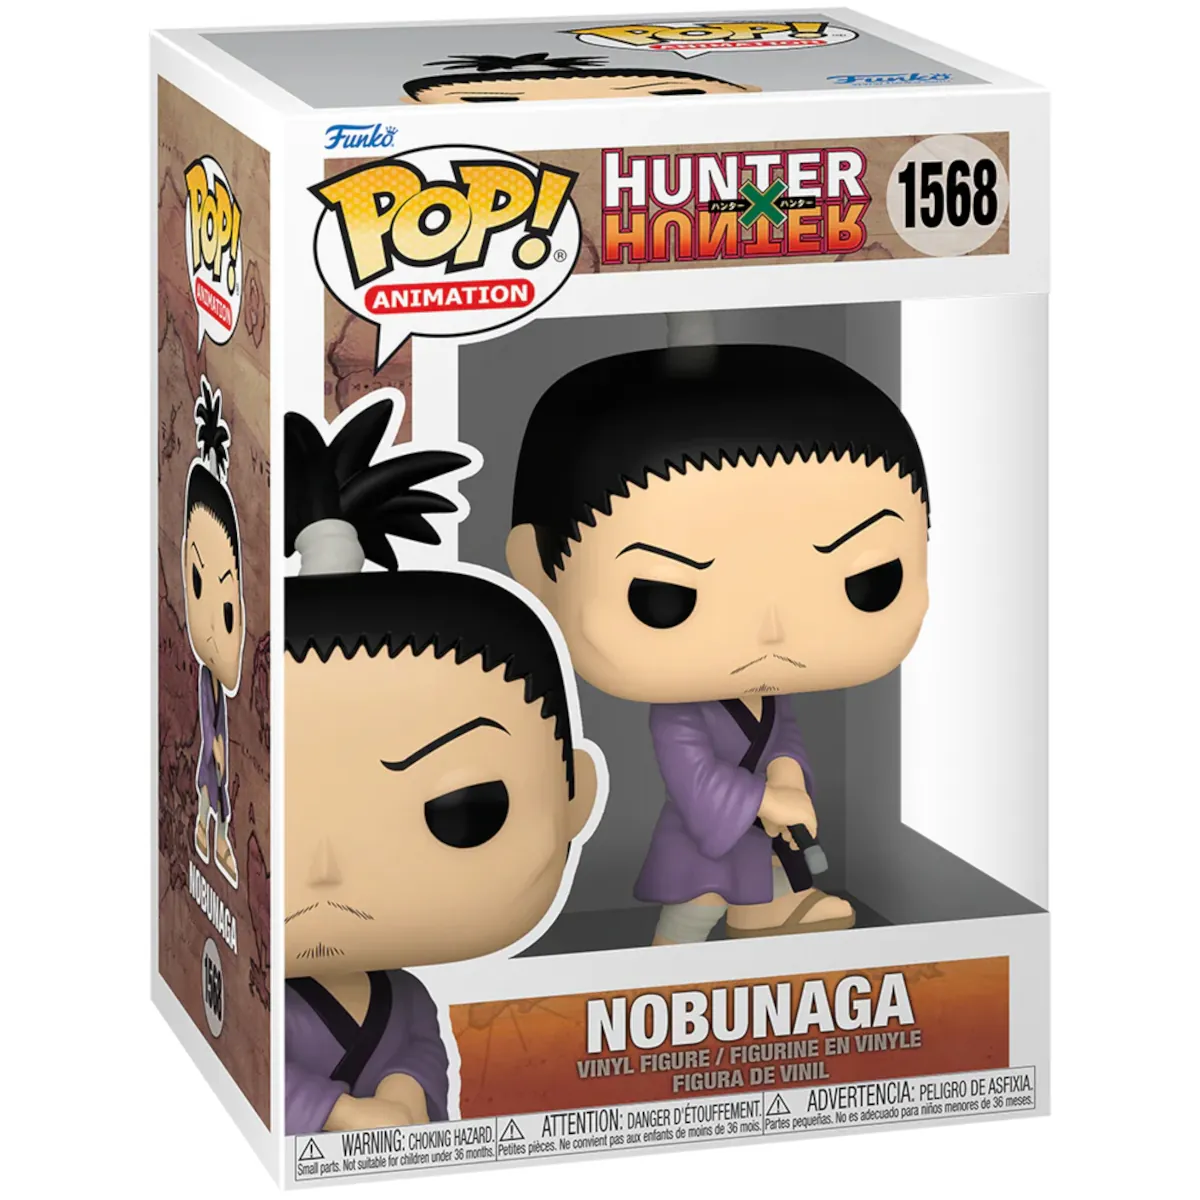 75588 Funko Pop! Animation - Hunter x Hunter - Nobunaga Collectable Vinyl Figure Box Front